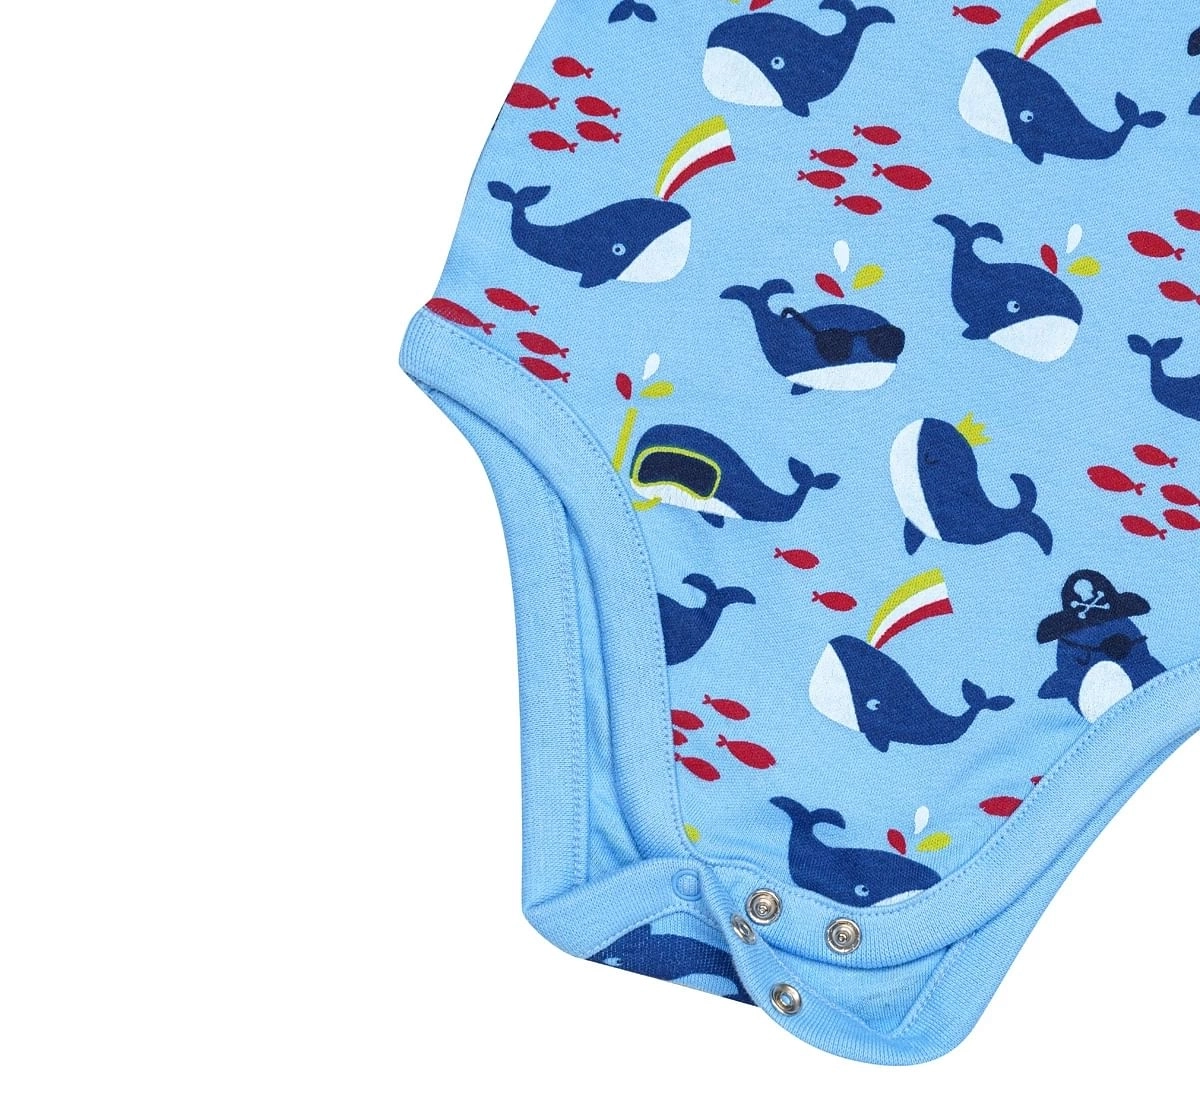 H by Hamleys Boys Short Sleeves Bodysuit Whale All Over Print-Multicolor